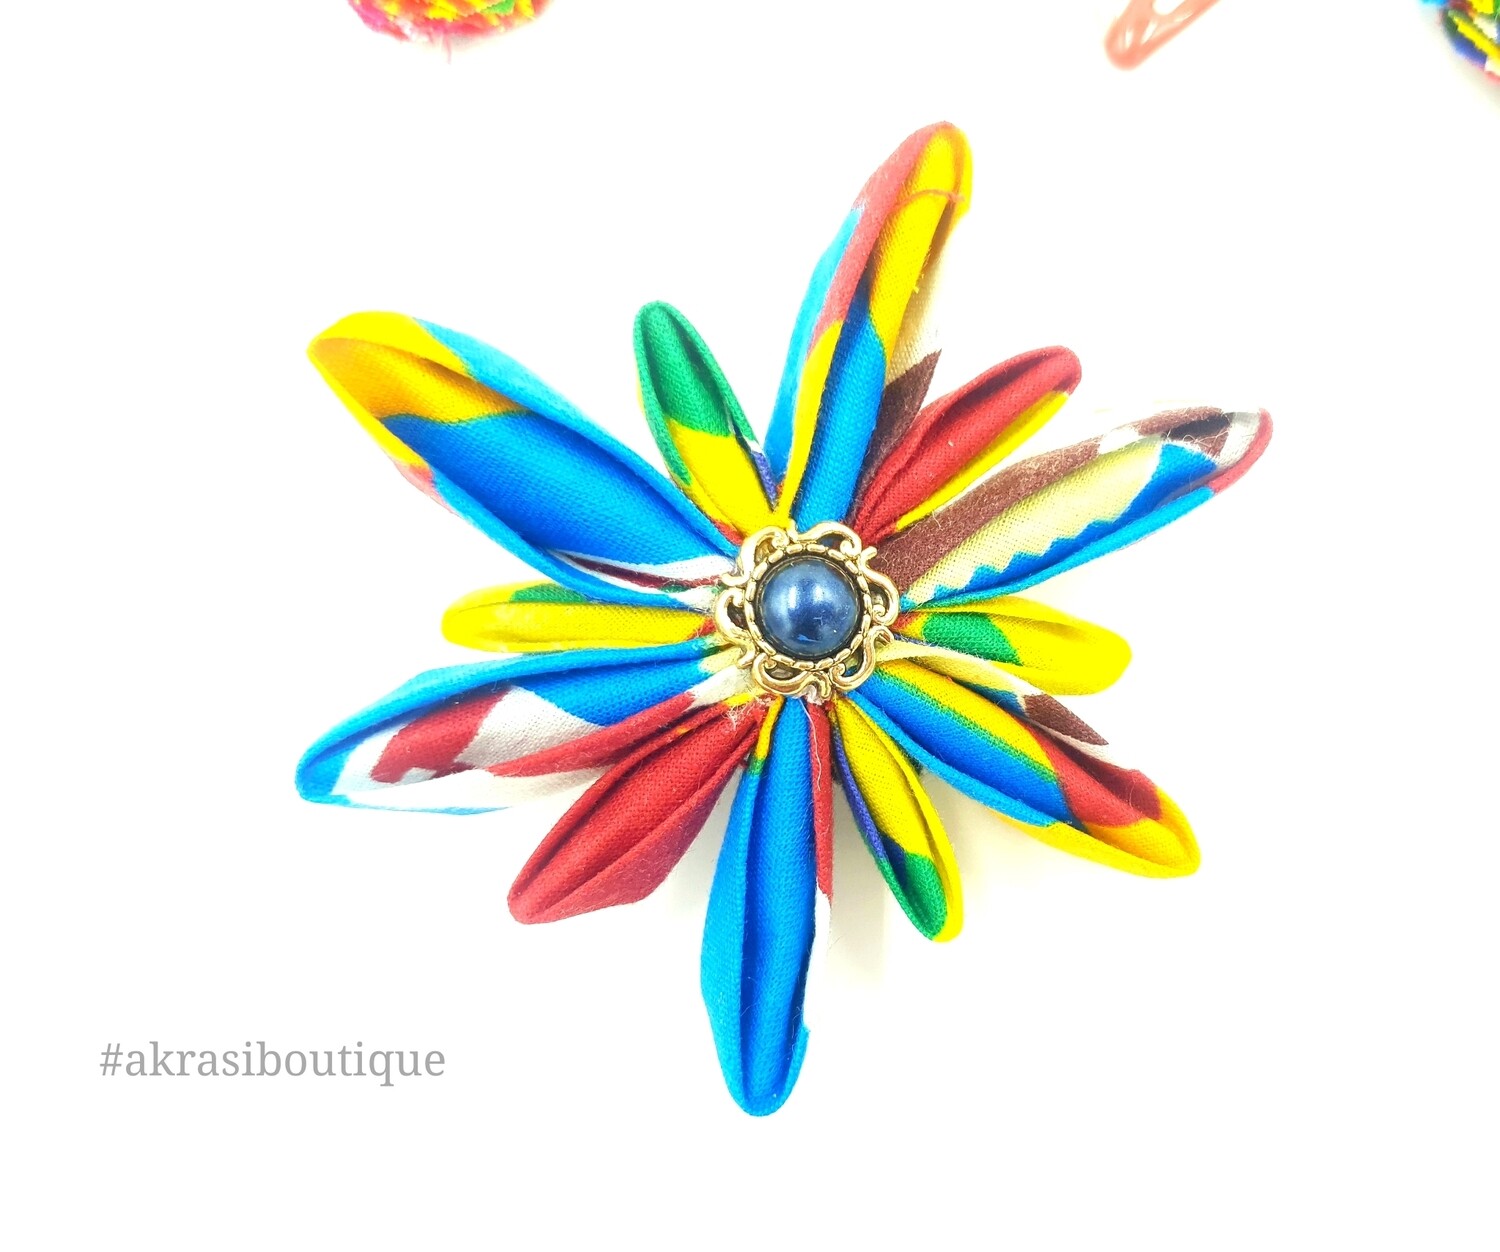 Star flower with vintage button centre in kente print | kanzashi flower pin | flower hair clip | flower brooch | clothing accessories